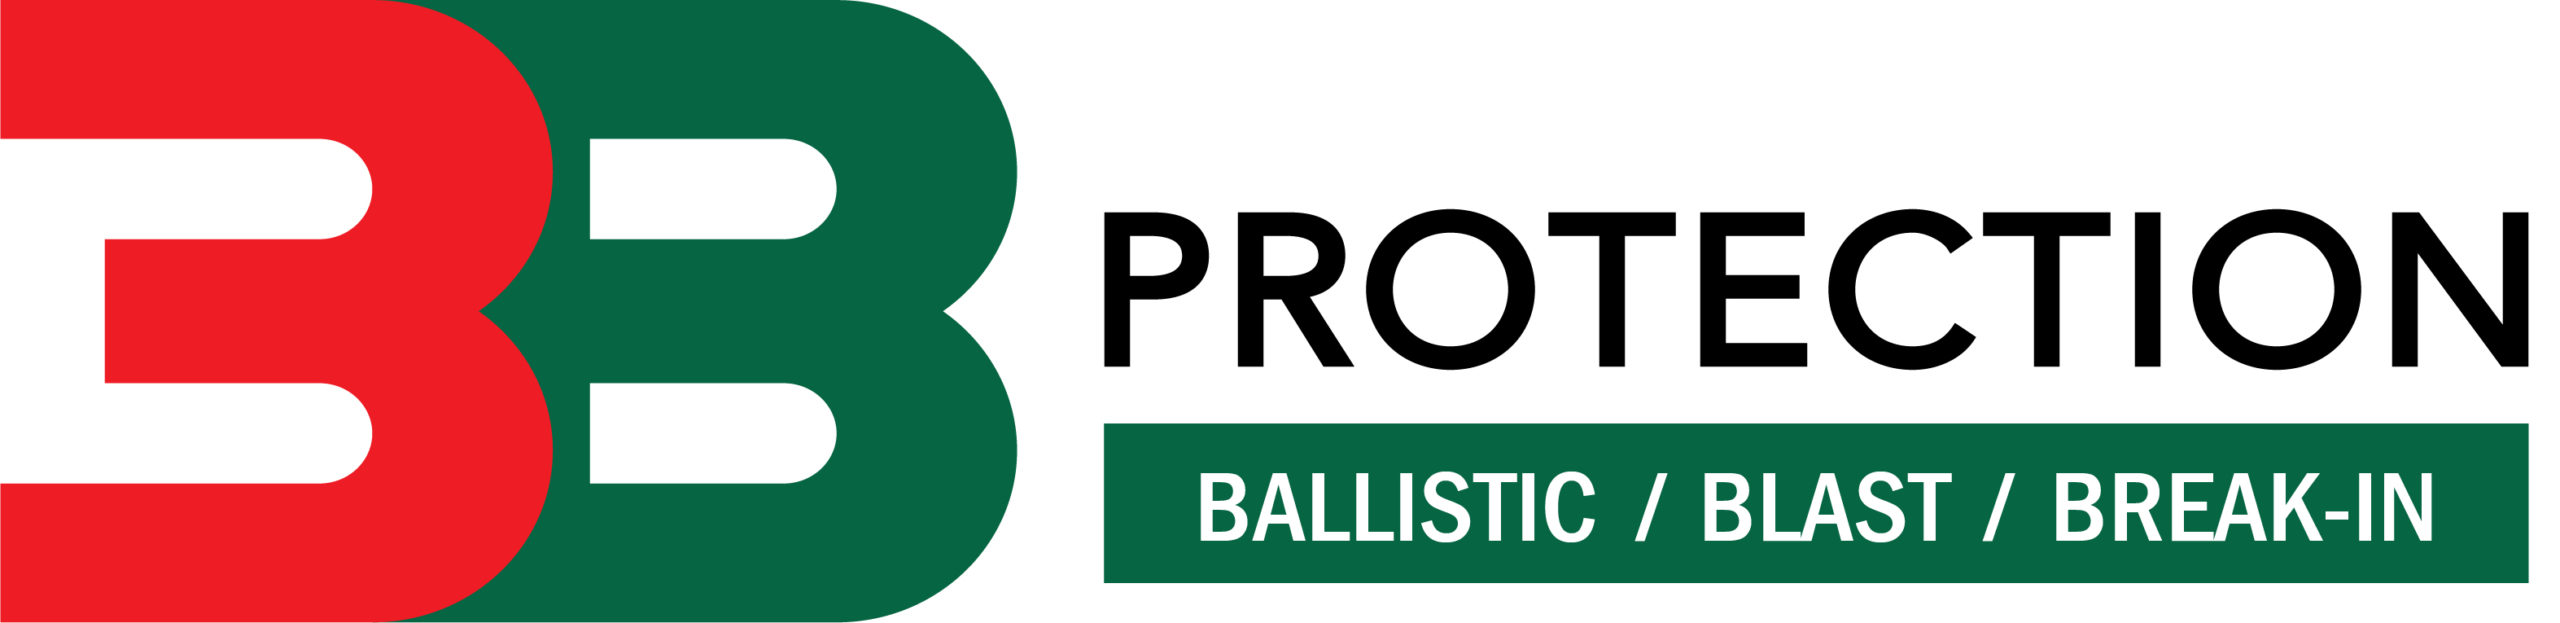 3B Protection Logo